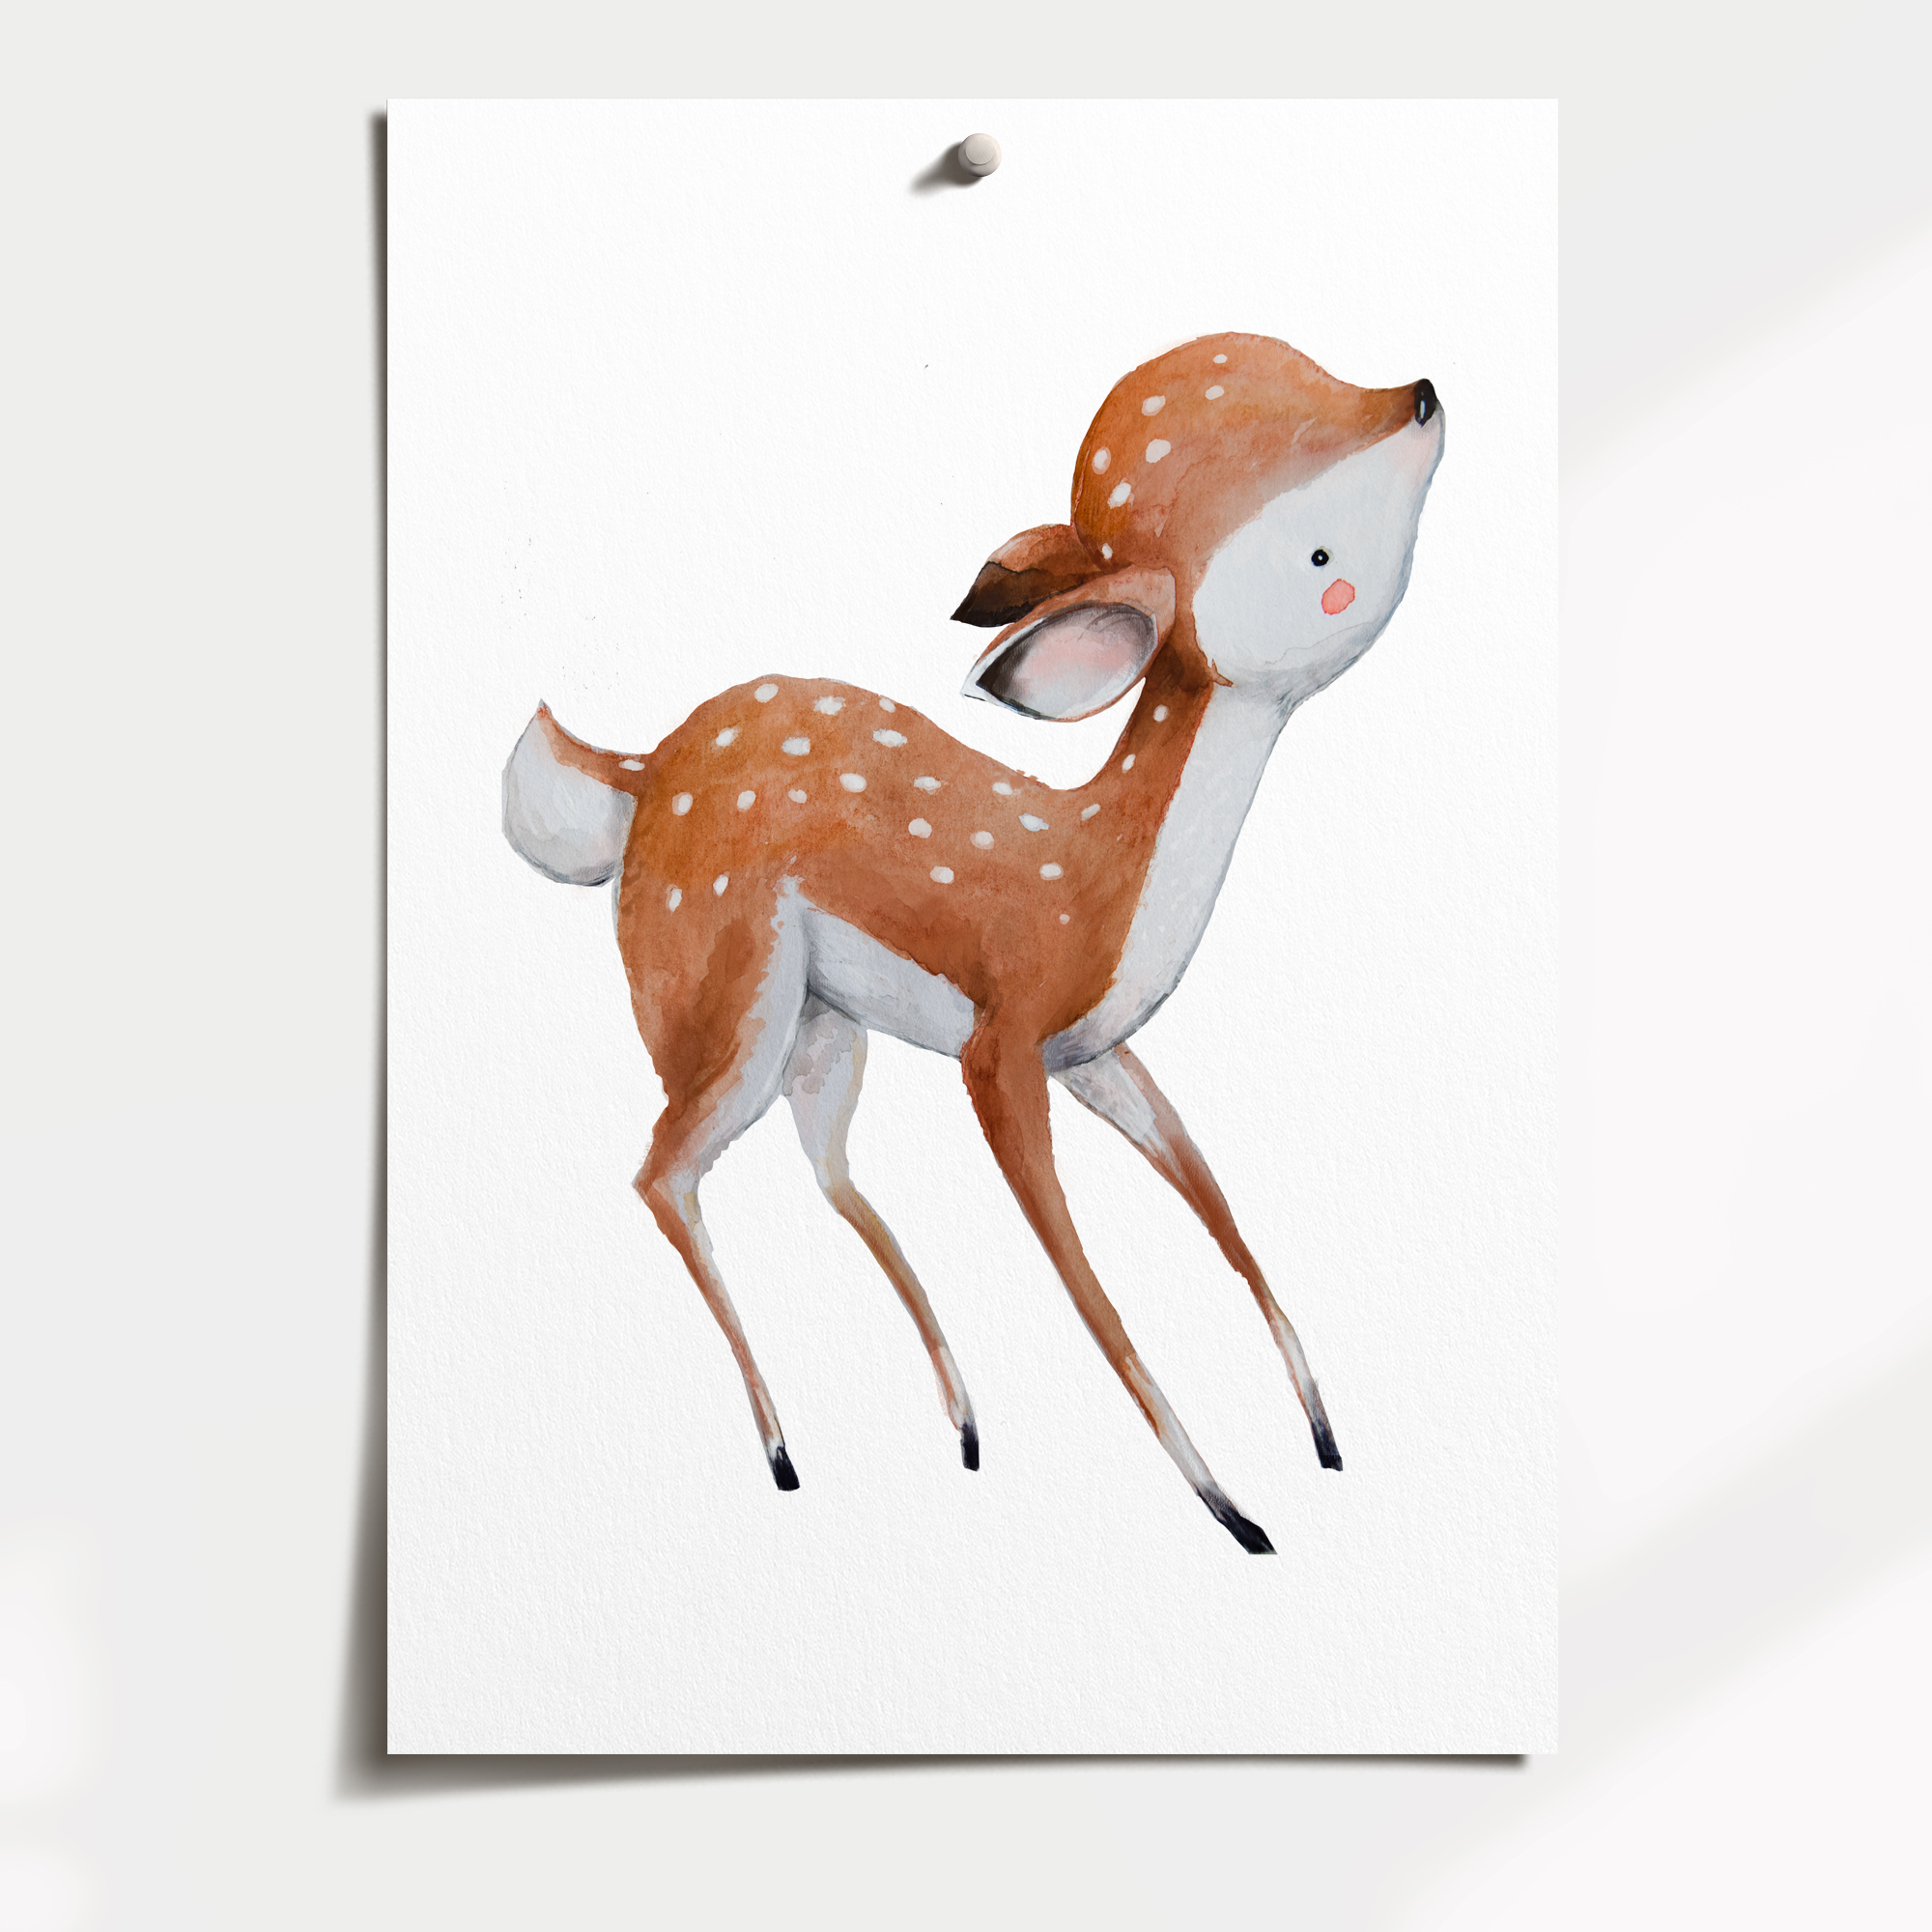 Woodland Baby Deer Print